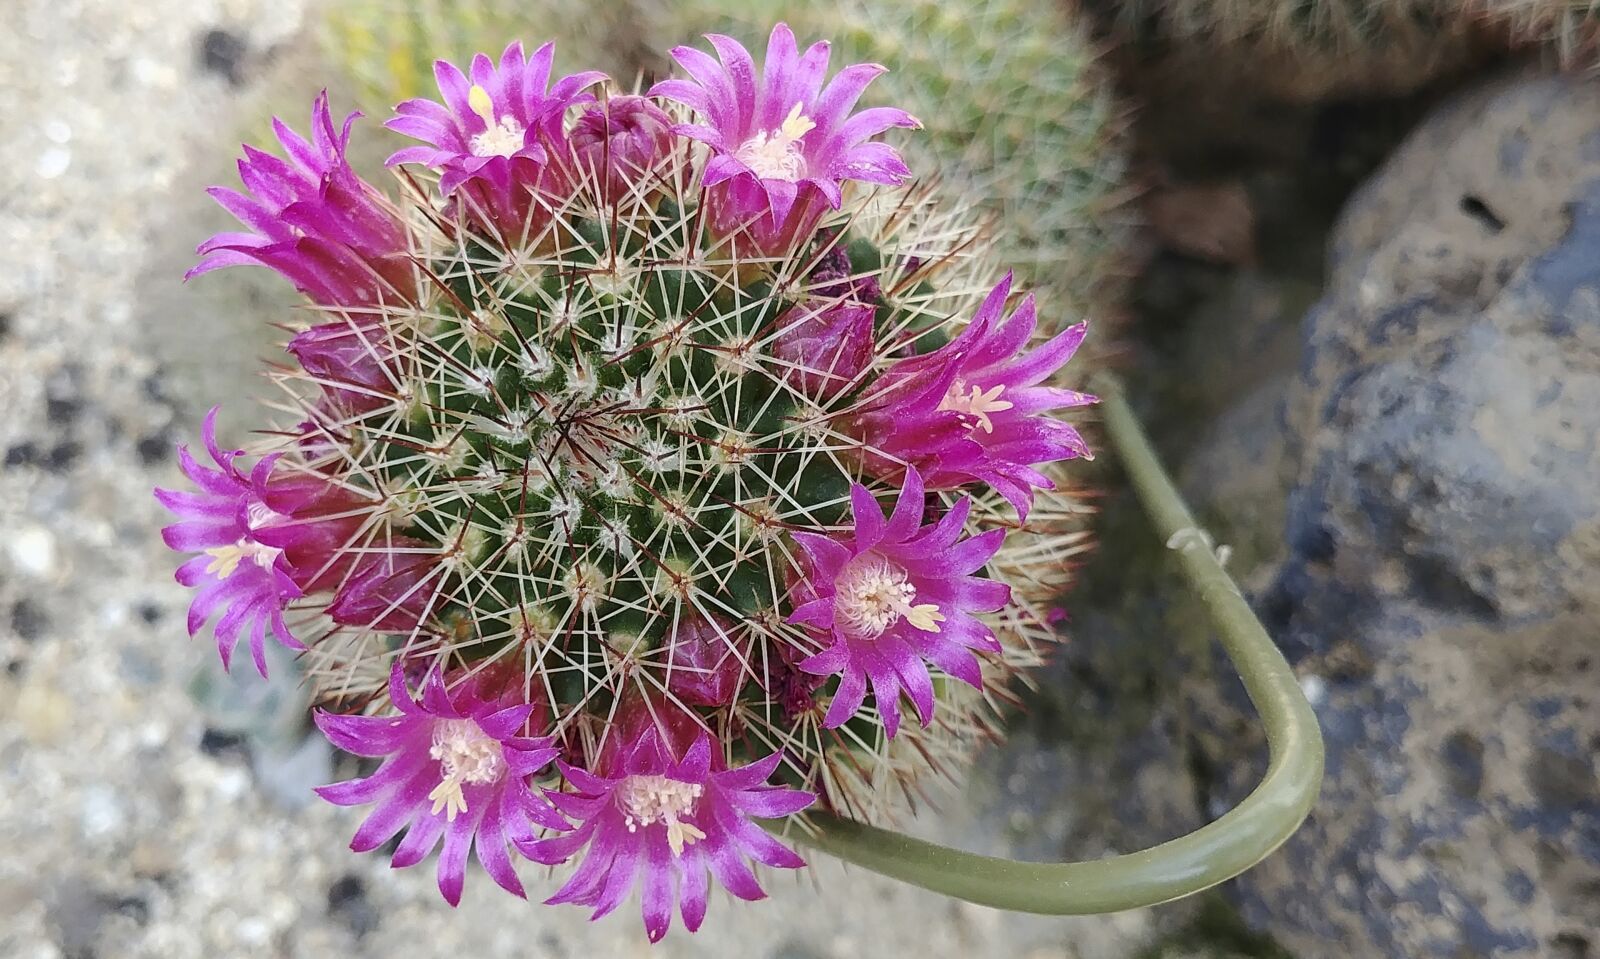 LG G6 sample photo. Cactus flower, botanical garden photography